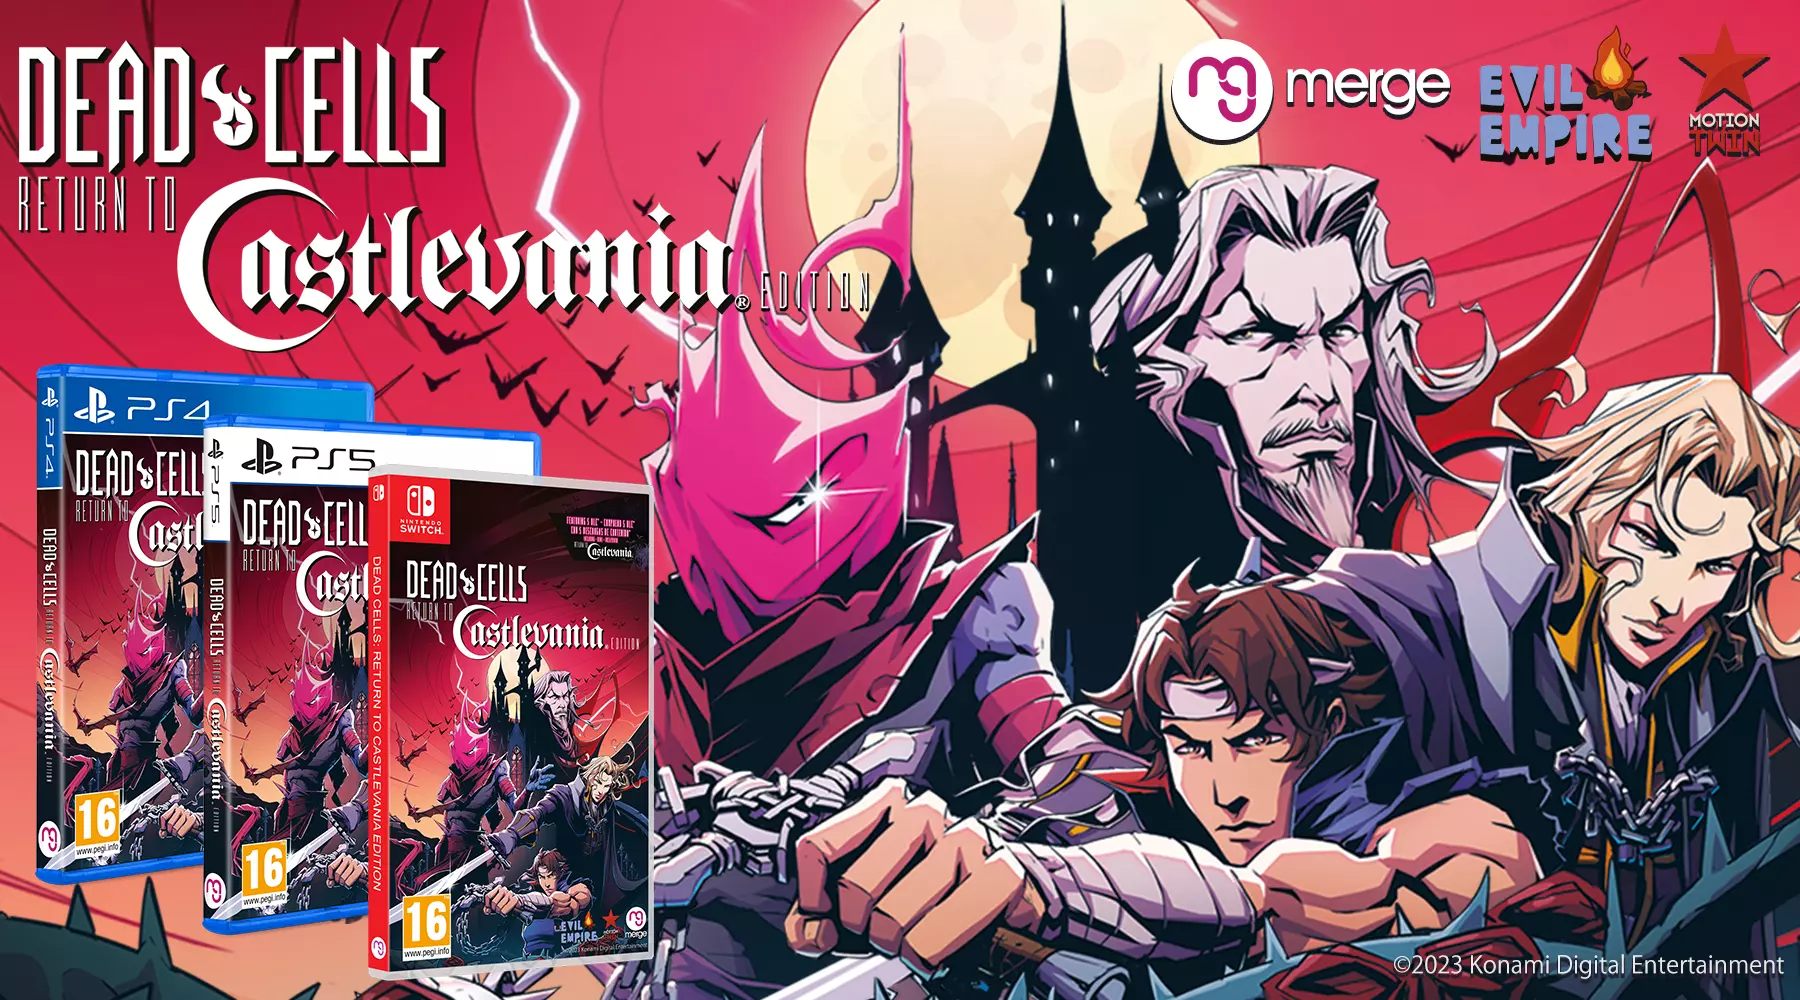 Dead Cells: Return to Castlevania arribarà en format físic a Nintendo Switch i PlayStation